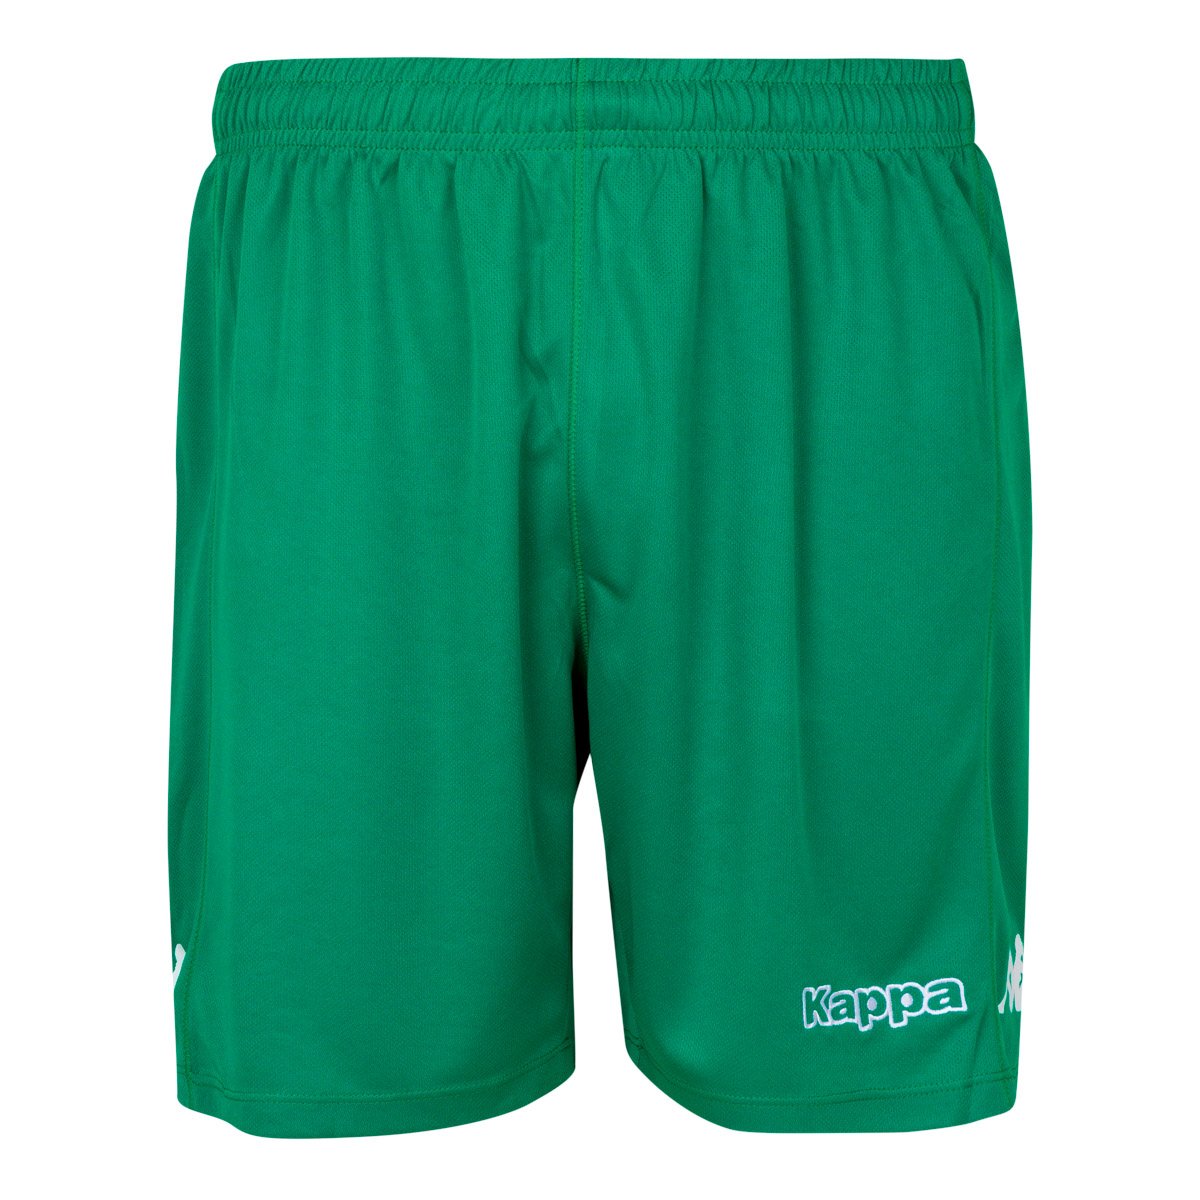 Pantalones cortes Multideporte Spero Verde Hombre - Imagen 1